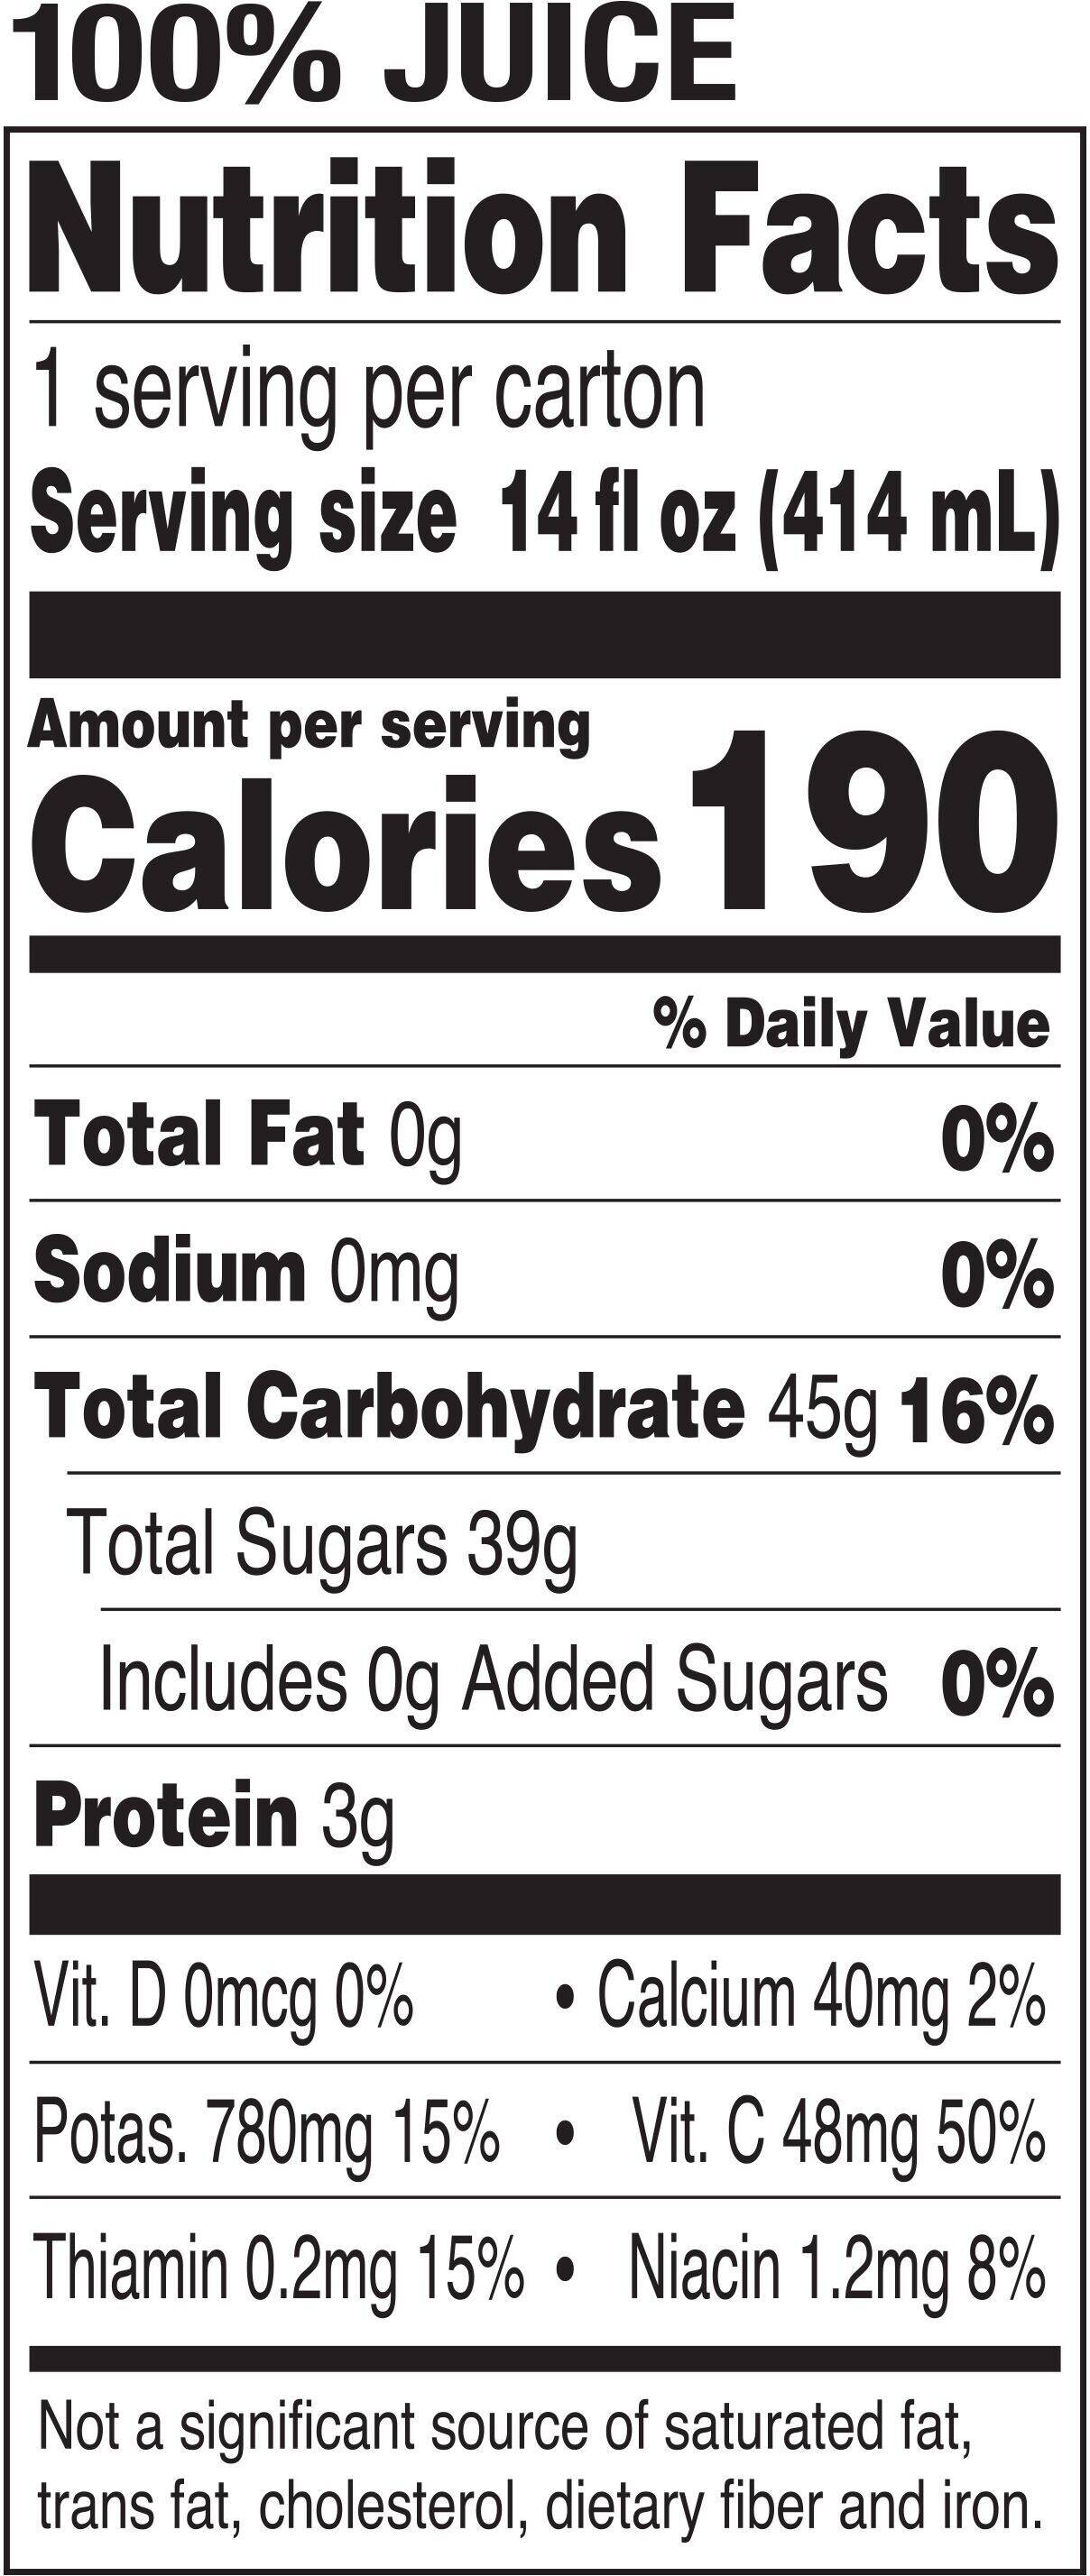 Image describing nutrition information for product Tropicana Pure Premium Home Style Orange Juice